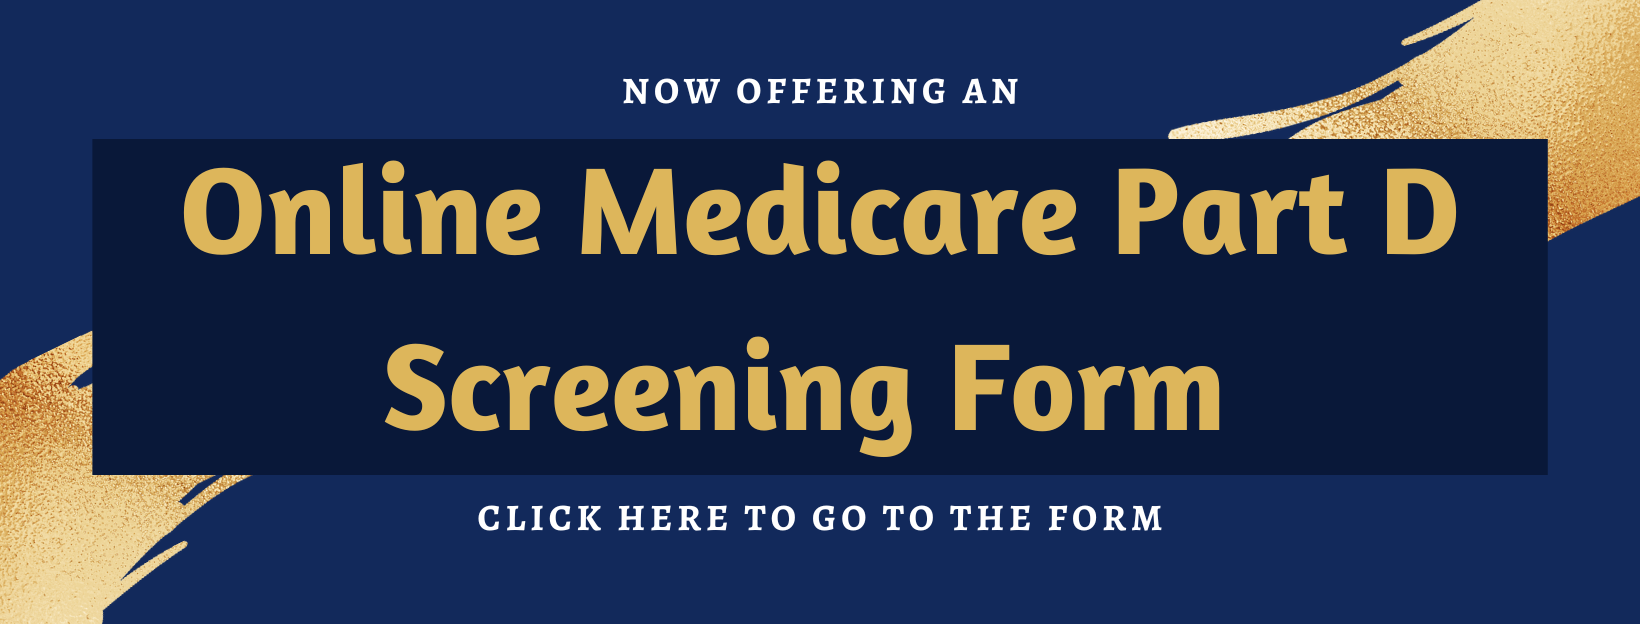 Image Links to Online Medicare Screening Form